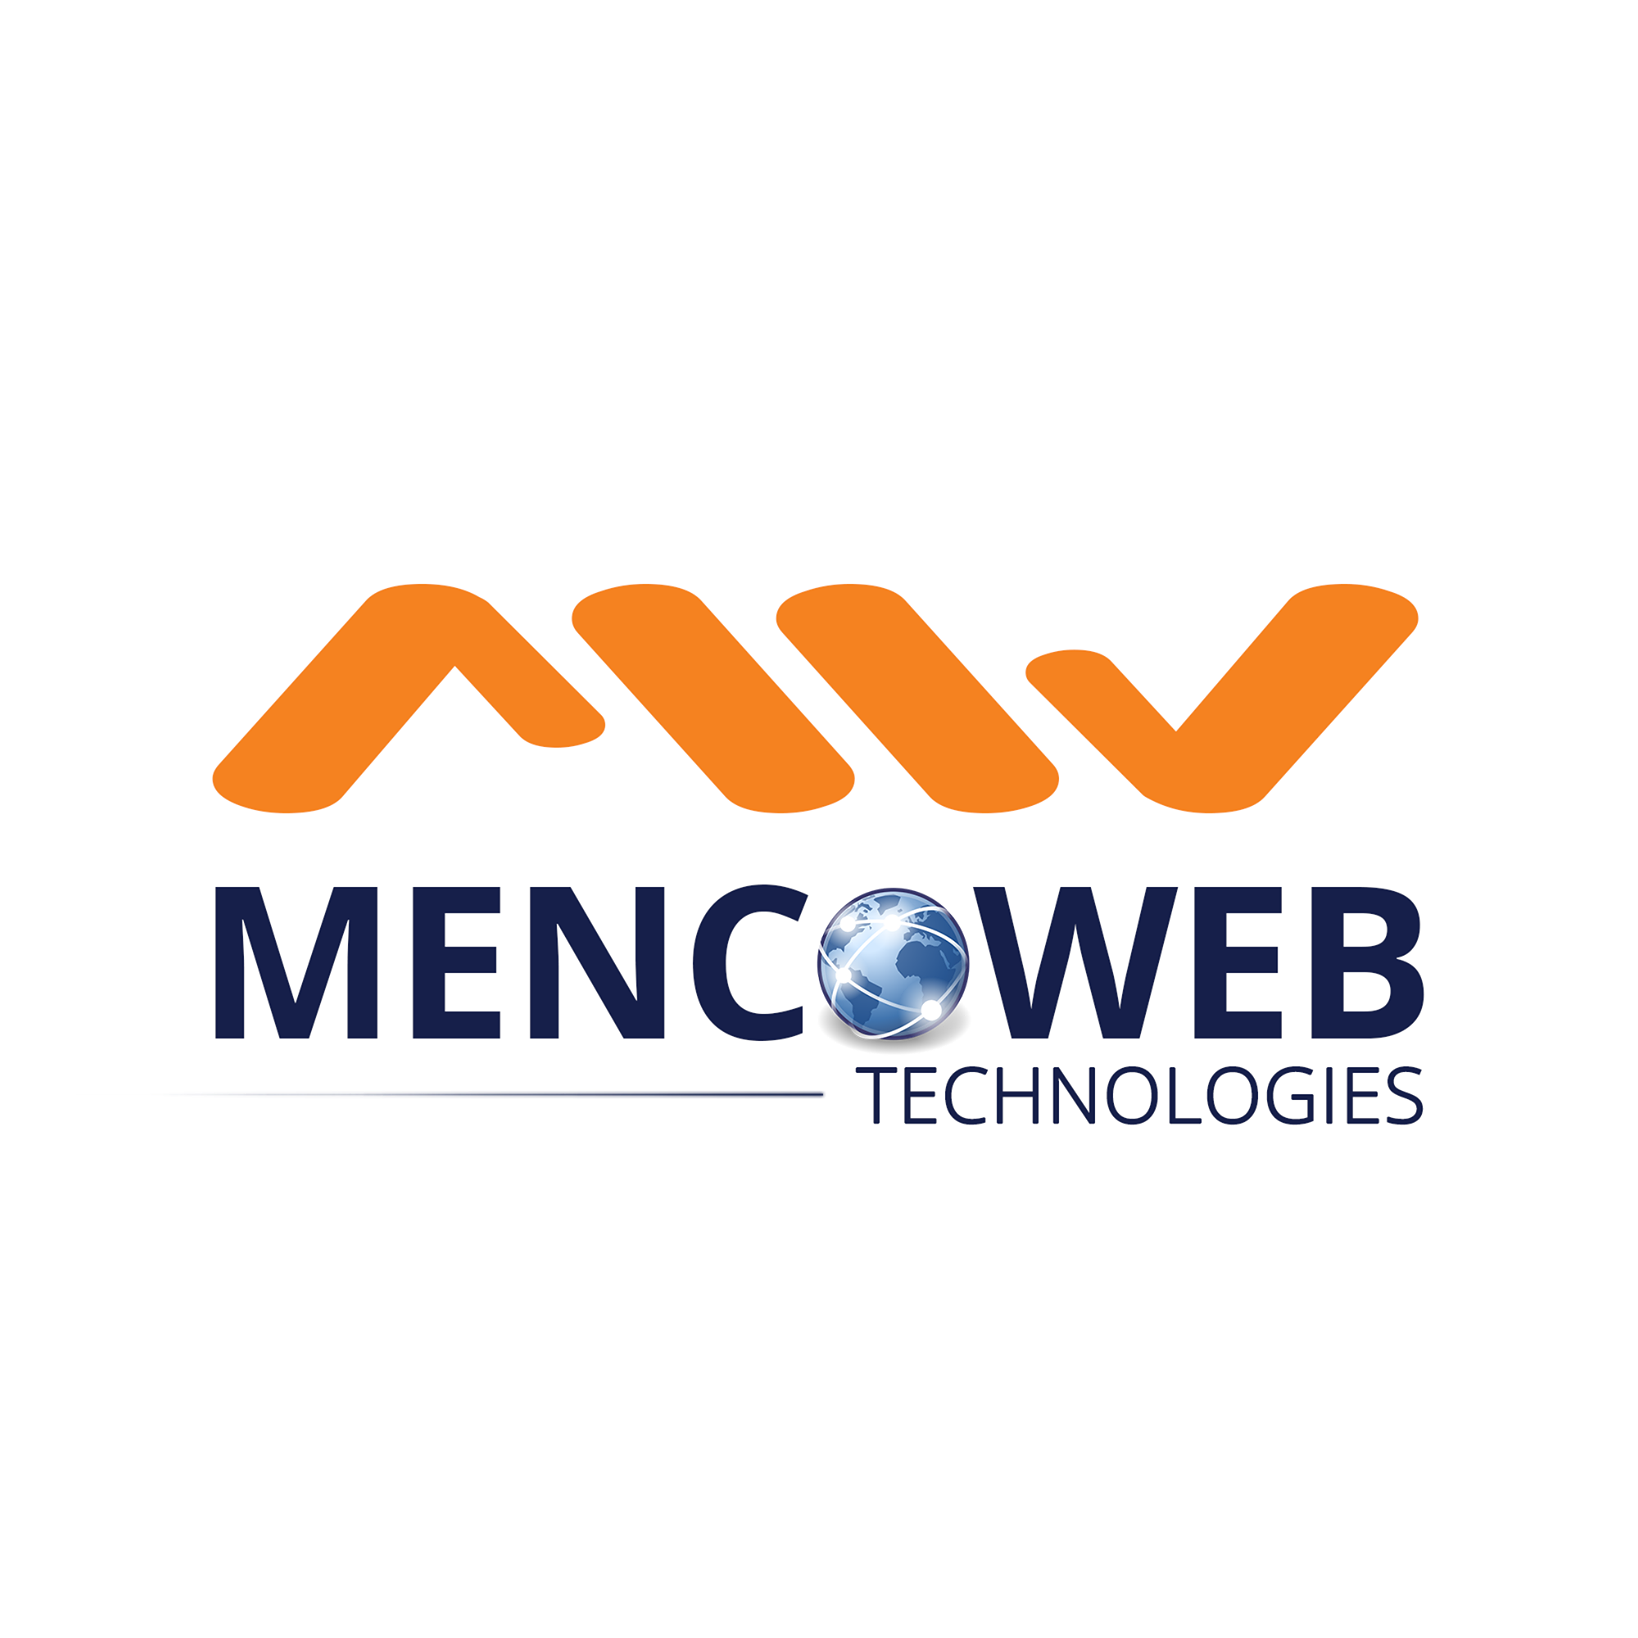 Mencoweb